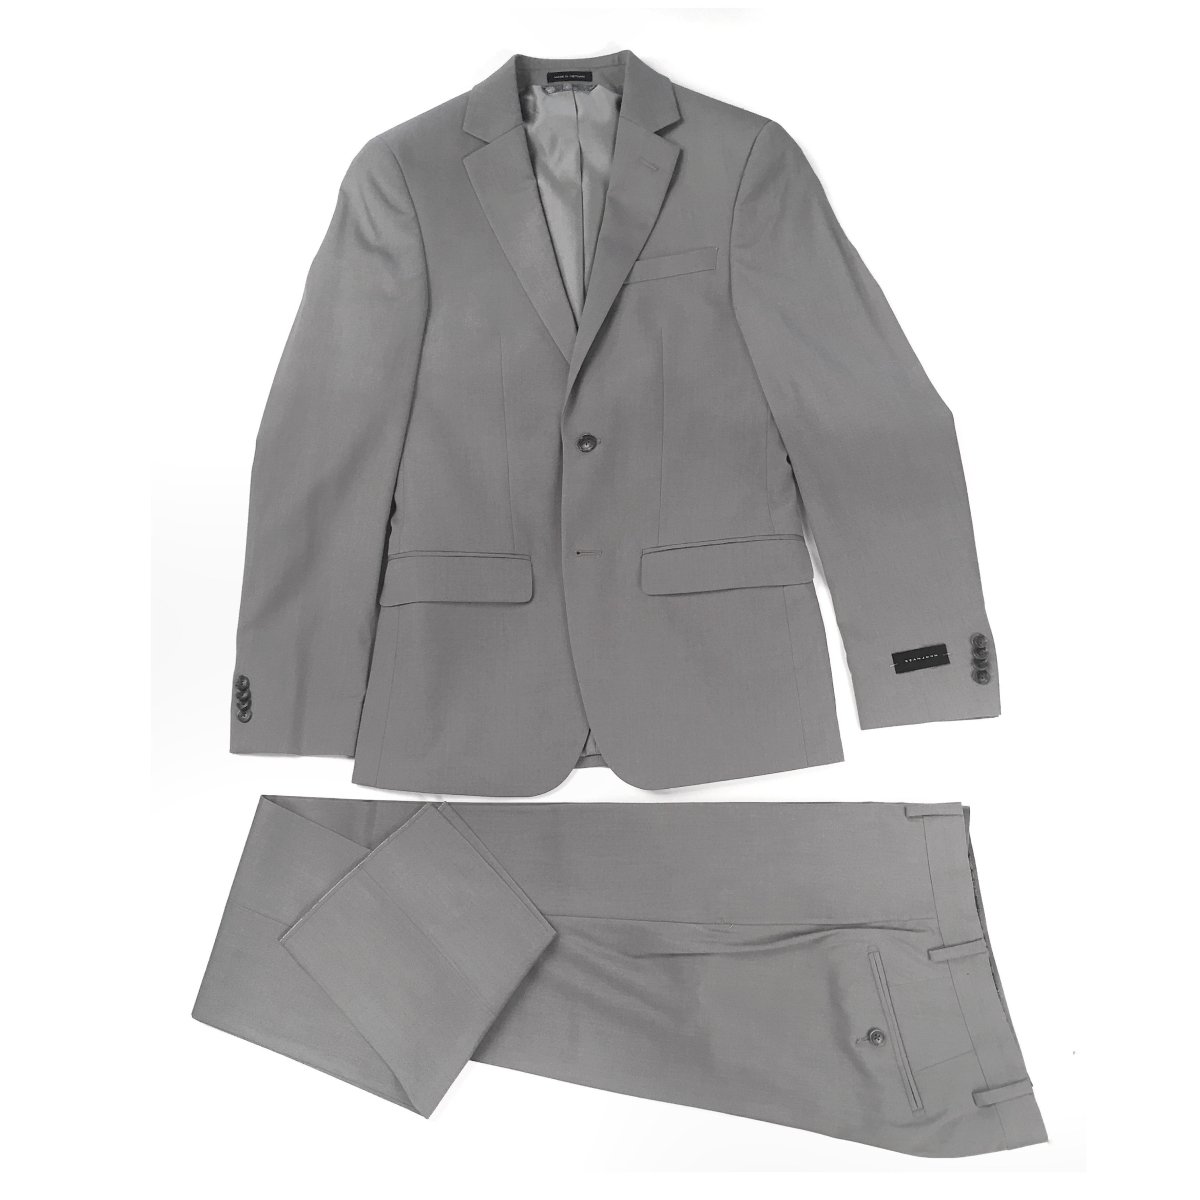 Sean John Mens Ultra-Slim Plain Light Grey Suit Suits (Men) Sean John 